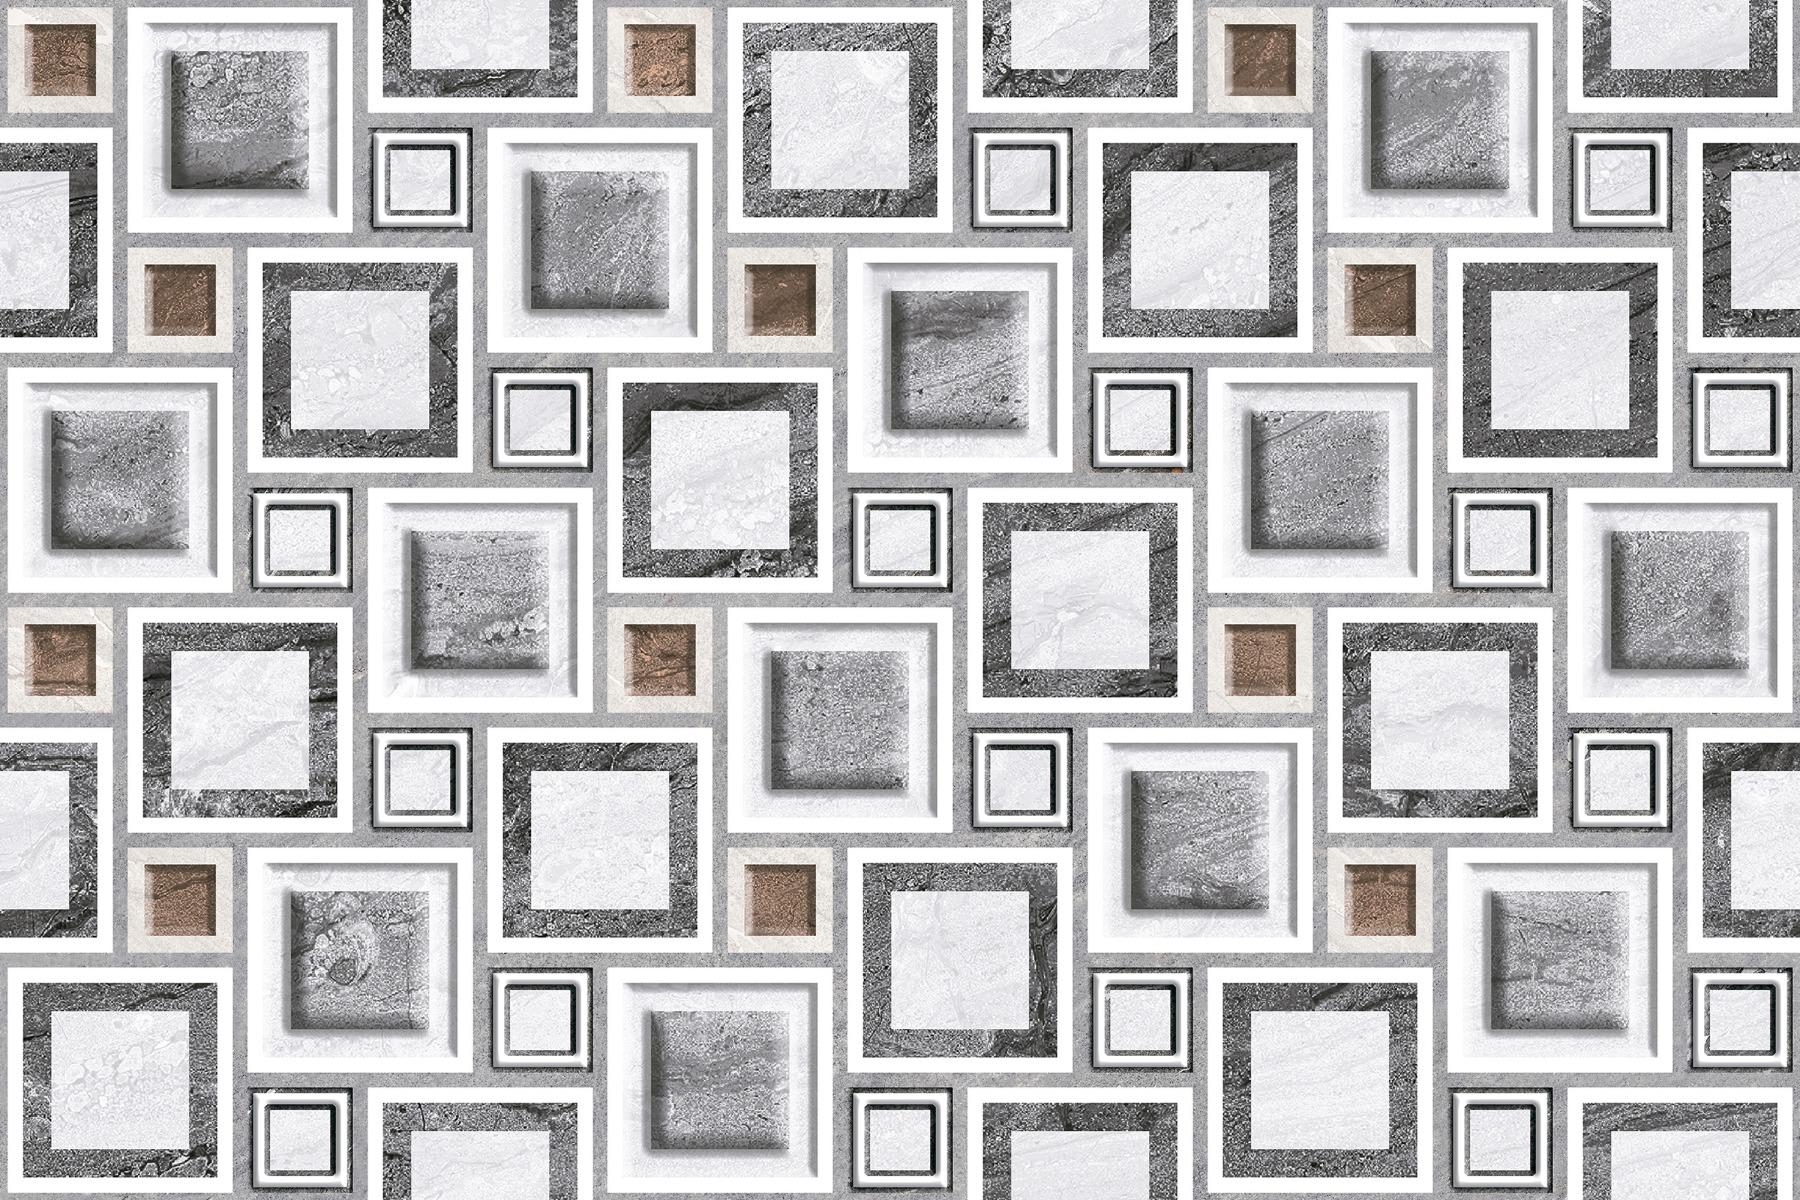 All Tiles for Bathroom Tiles, Living Room Tiles, Accent Tiles